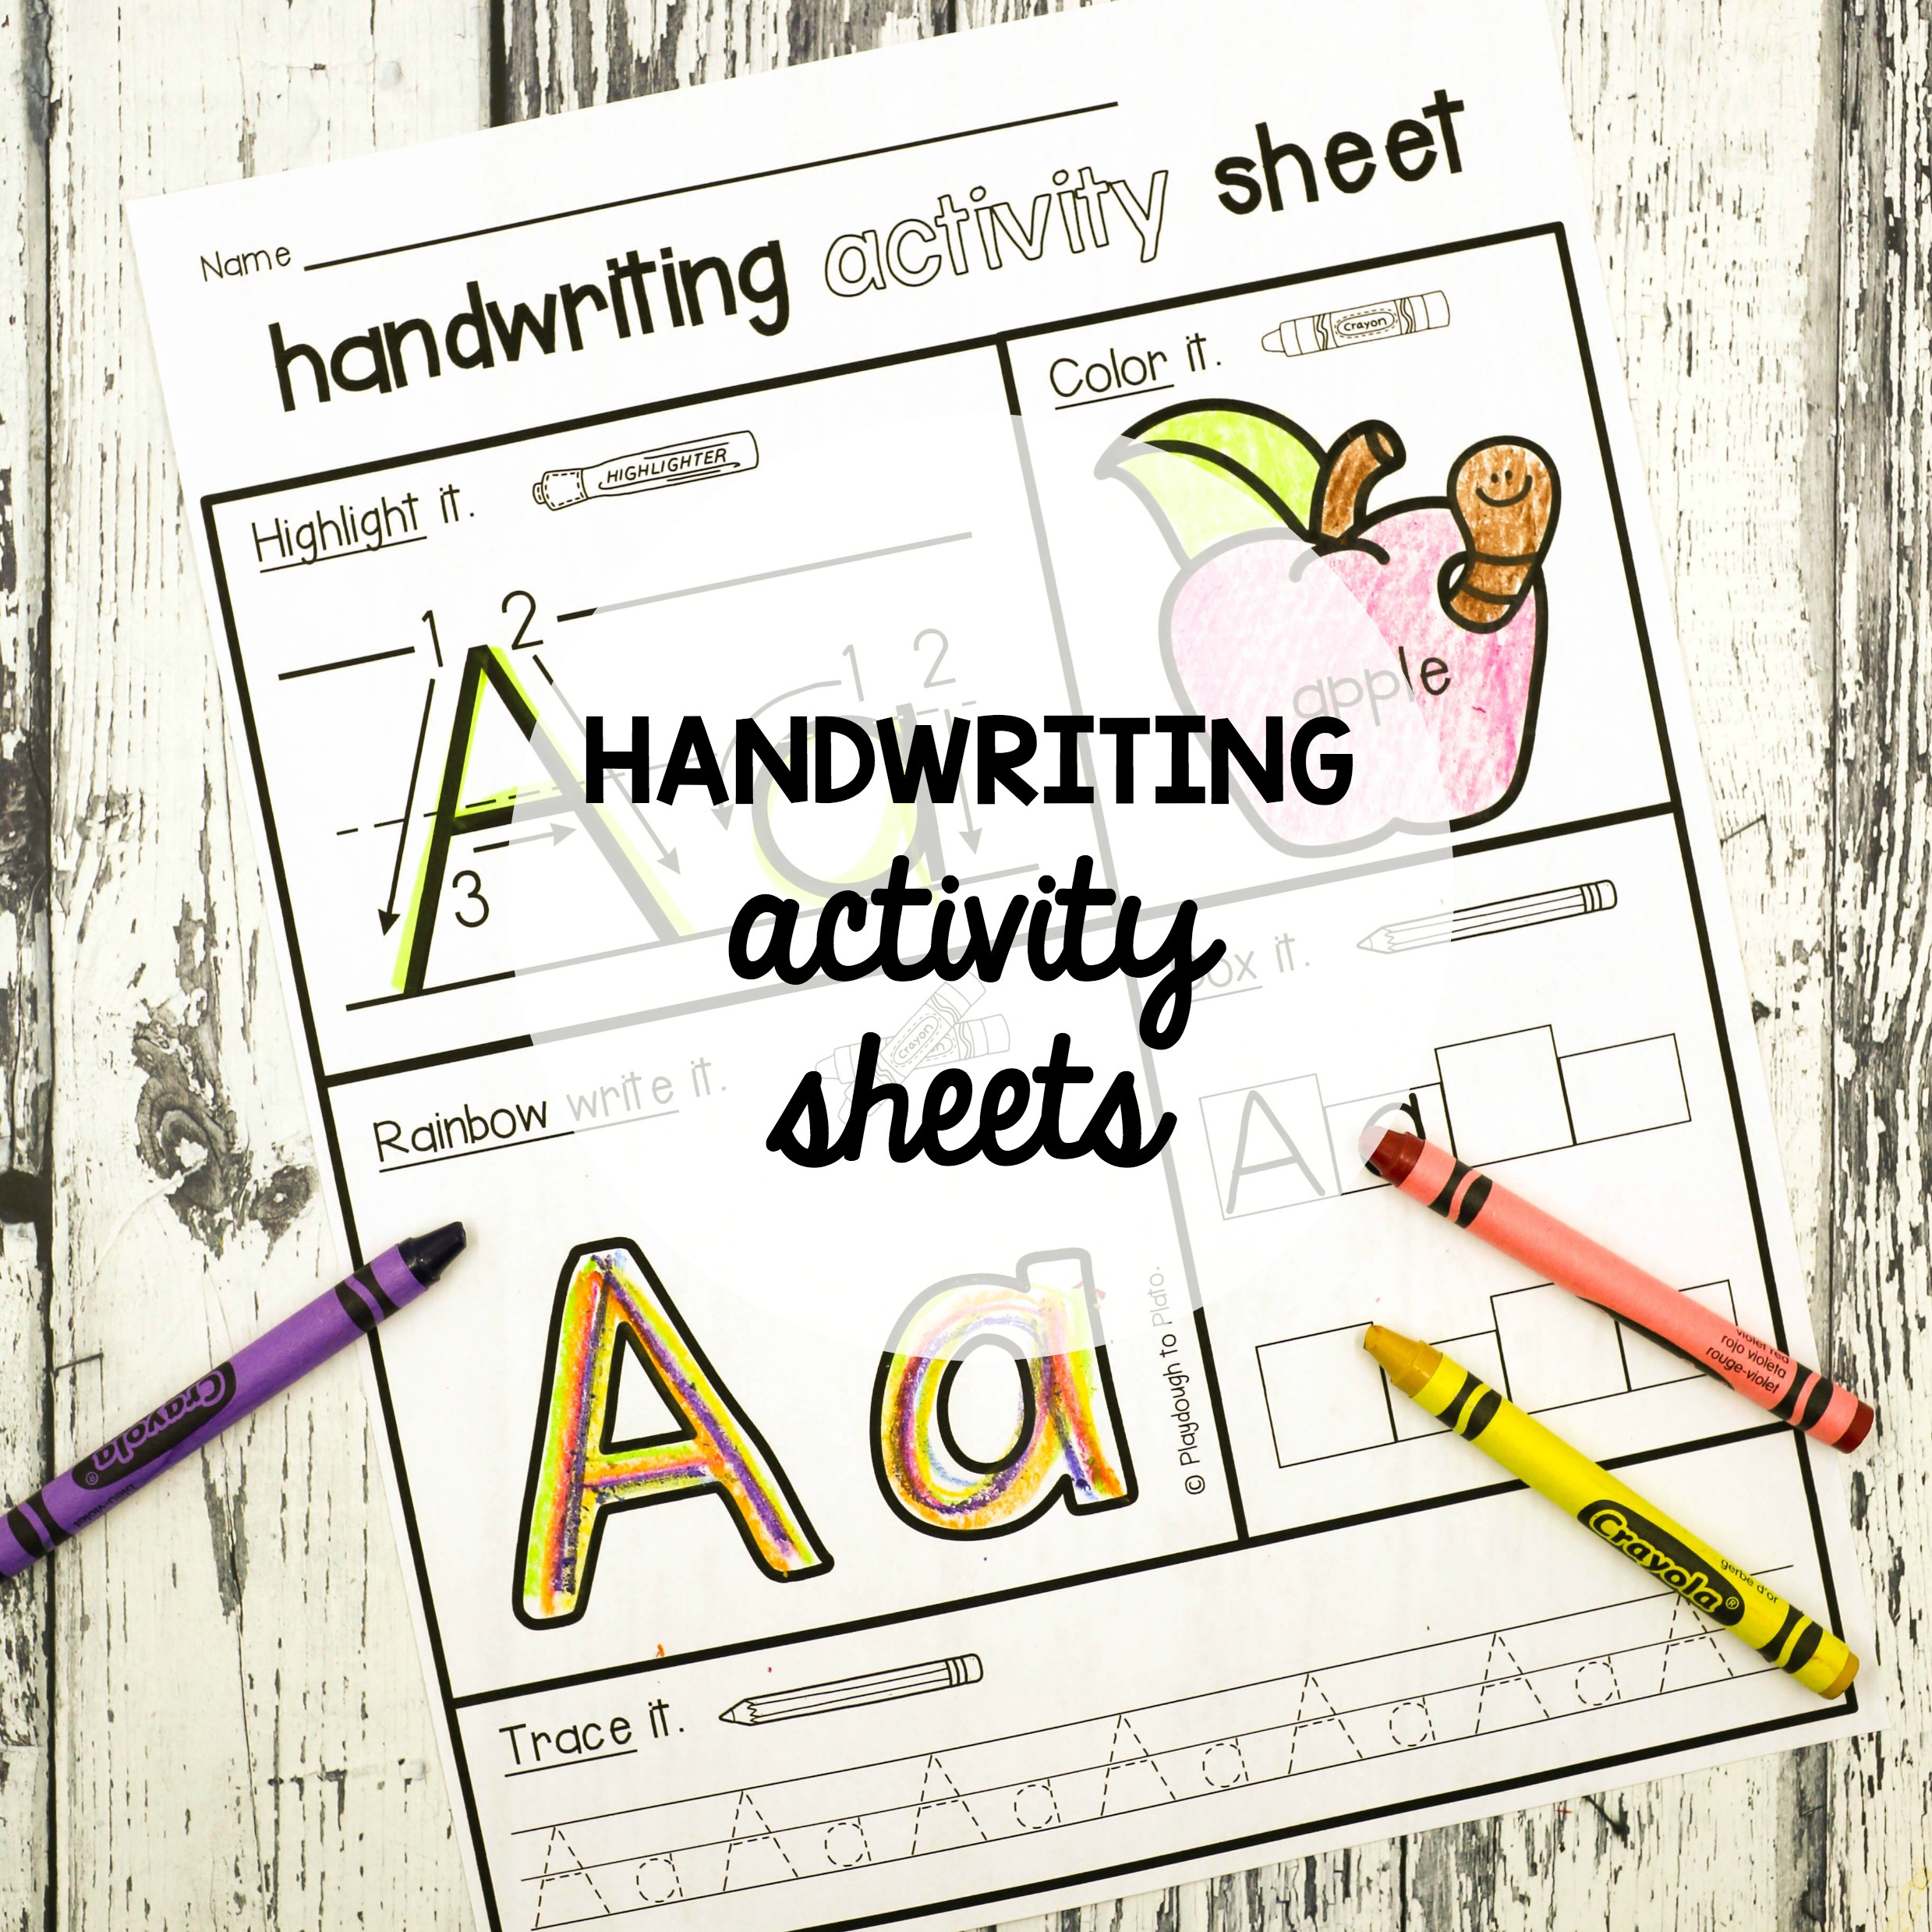 Handwriting activity. Writing activities. Guided writing activities. Writing activity 4